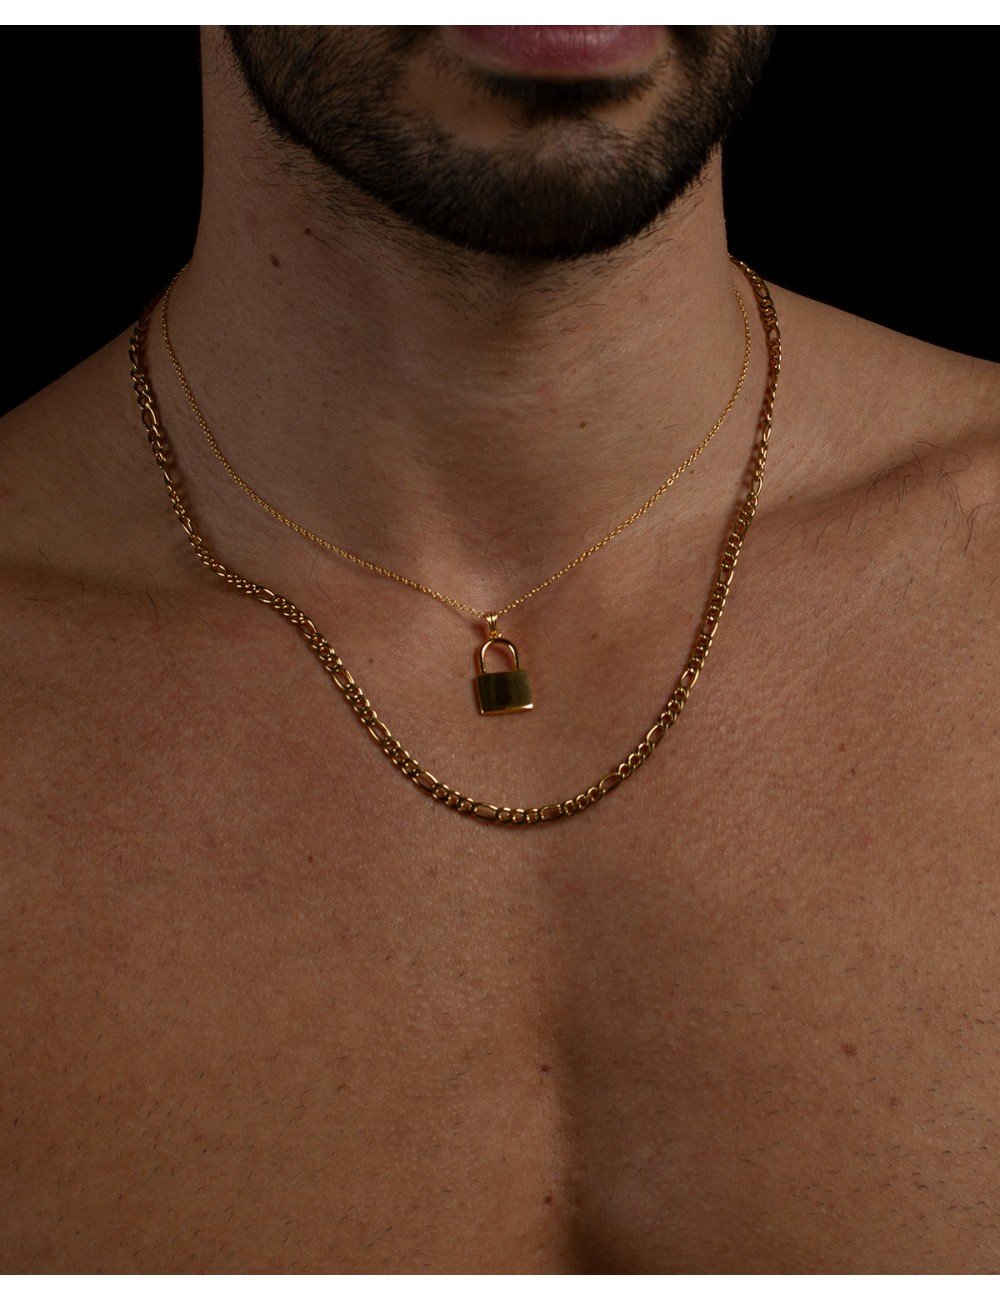 Men Women Alloy Square Lock Pendant Necklace Padlock Silver Chain Charms  Jewelry | eBay